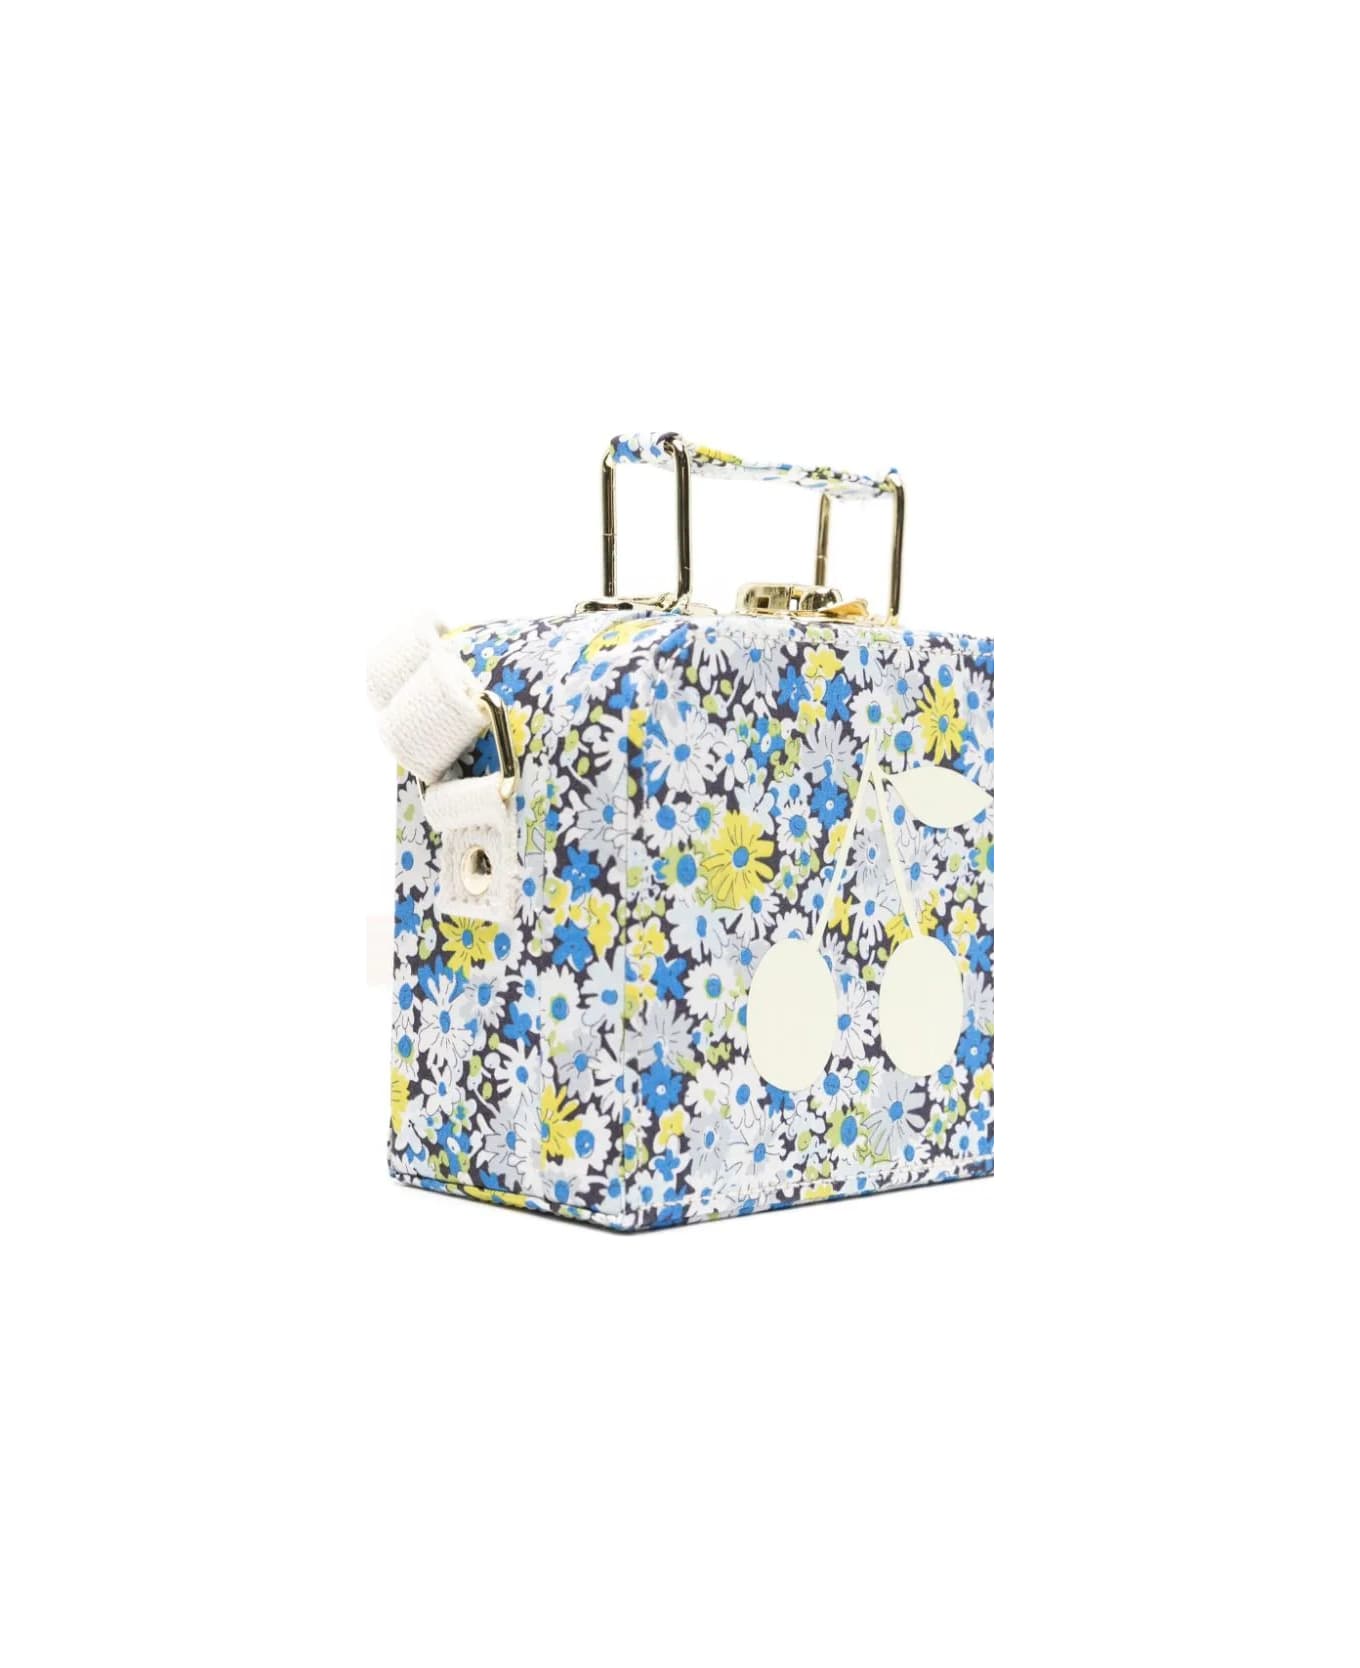 Bonpoint Aimane Valise Bag In Blue Flowers - Blue